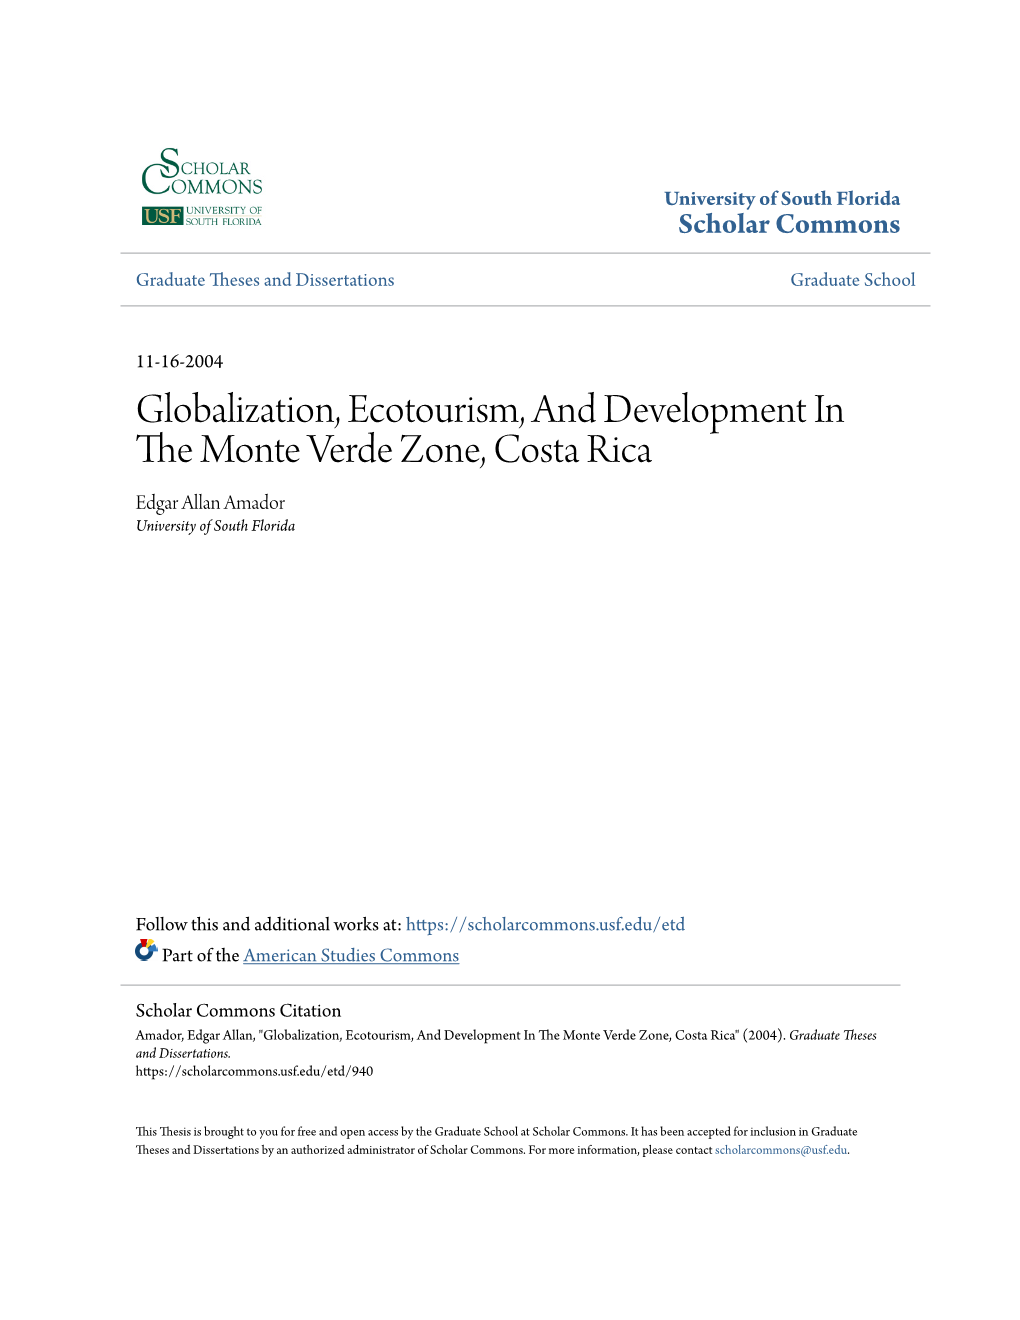 Globalization, Ecotourism, and Development in the Monte Verde Zone, Costa Rica